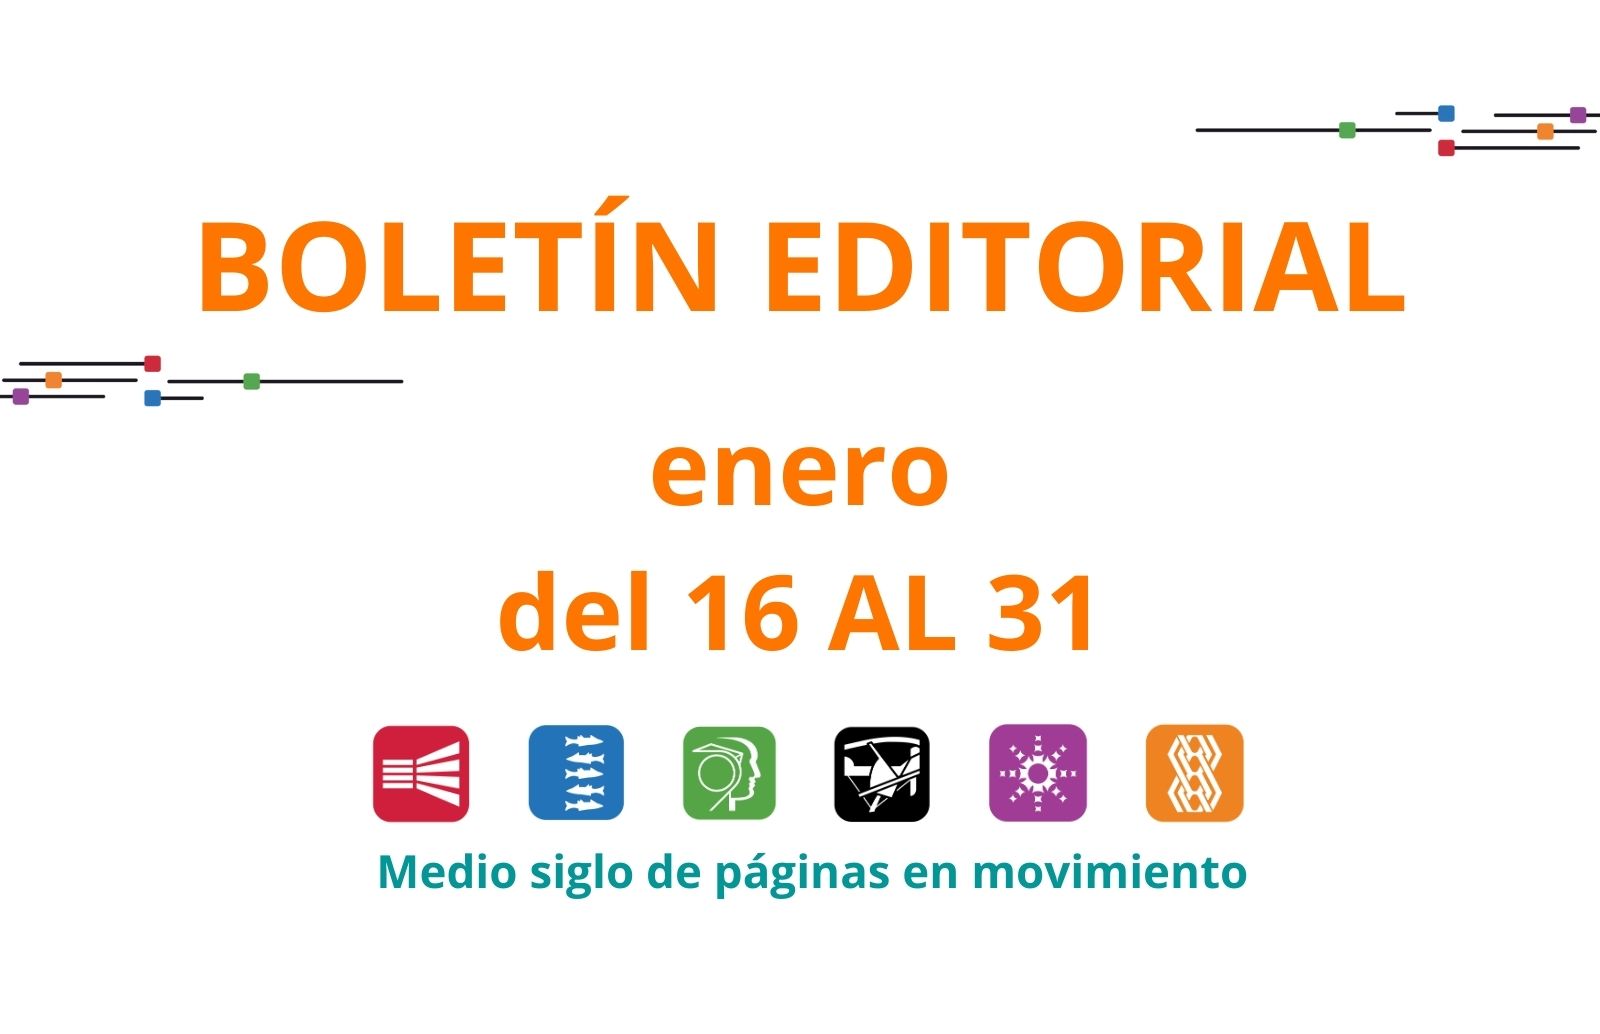 Boletín editorial LibrosUAM, núm. 12